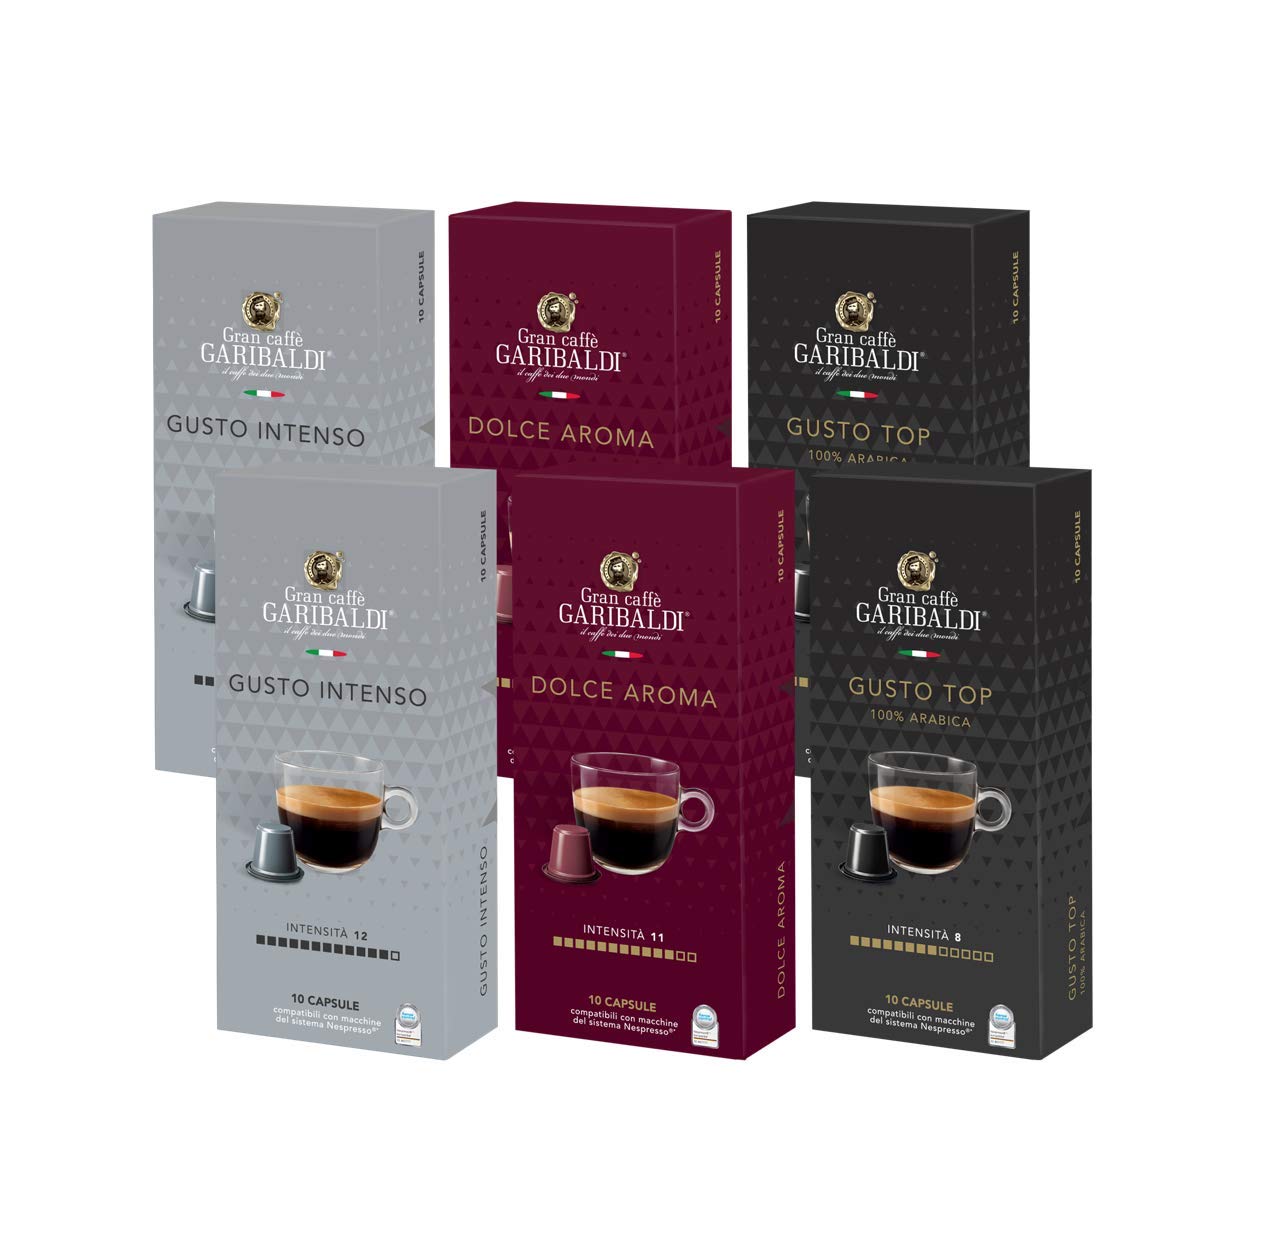 Gran Caff Garibaldi Nespresso* compatible capsules (Variety Pack, 60 Count)